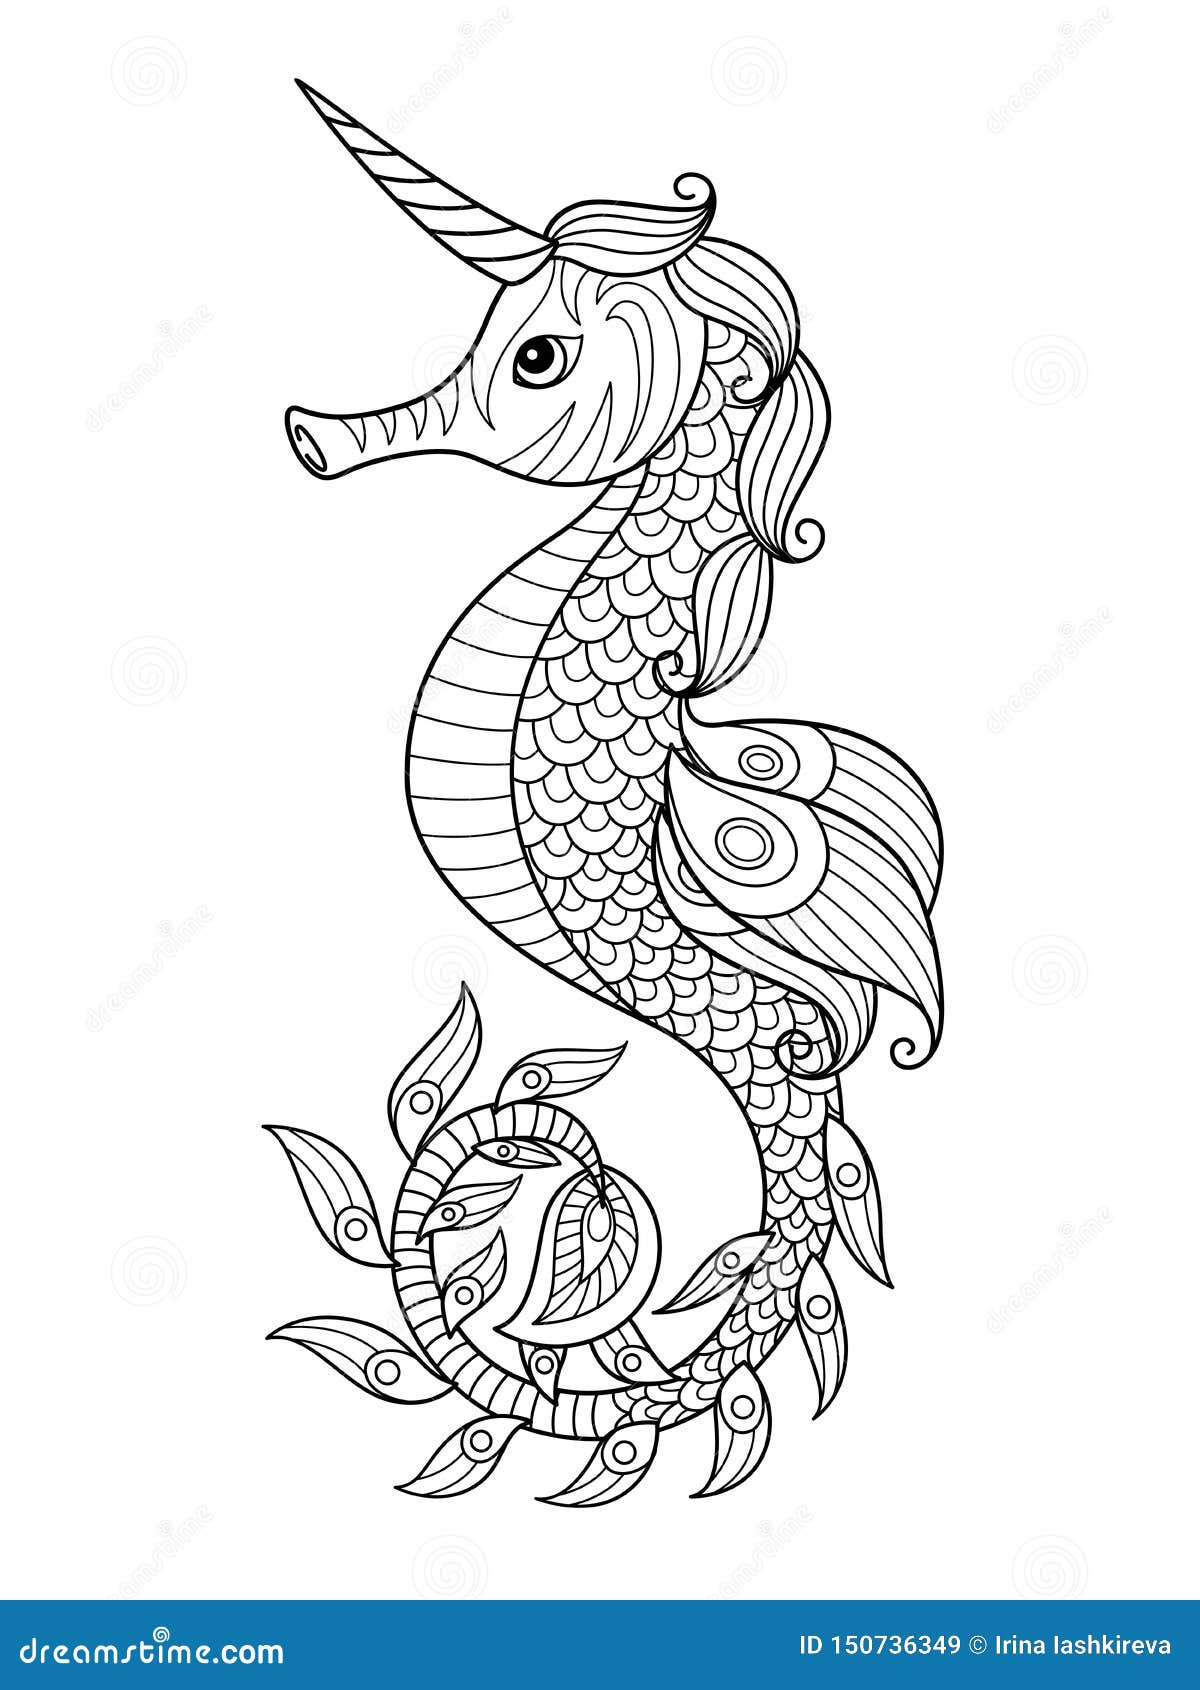 Sea doodle coloring book page unicorn seahorse stock vector